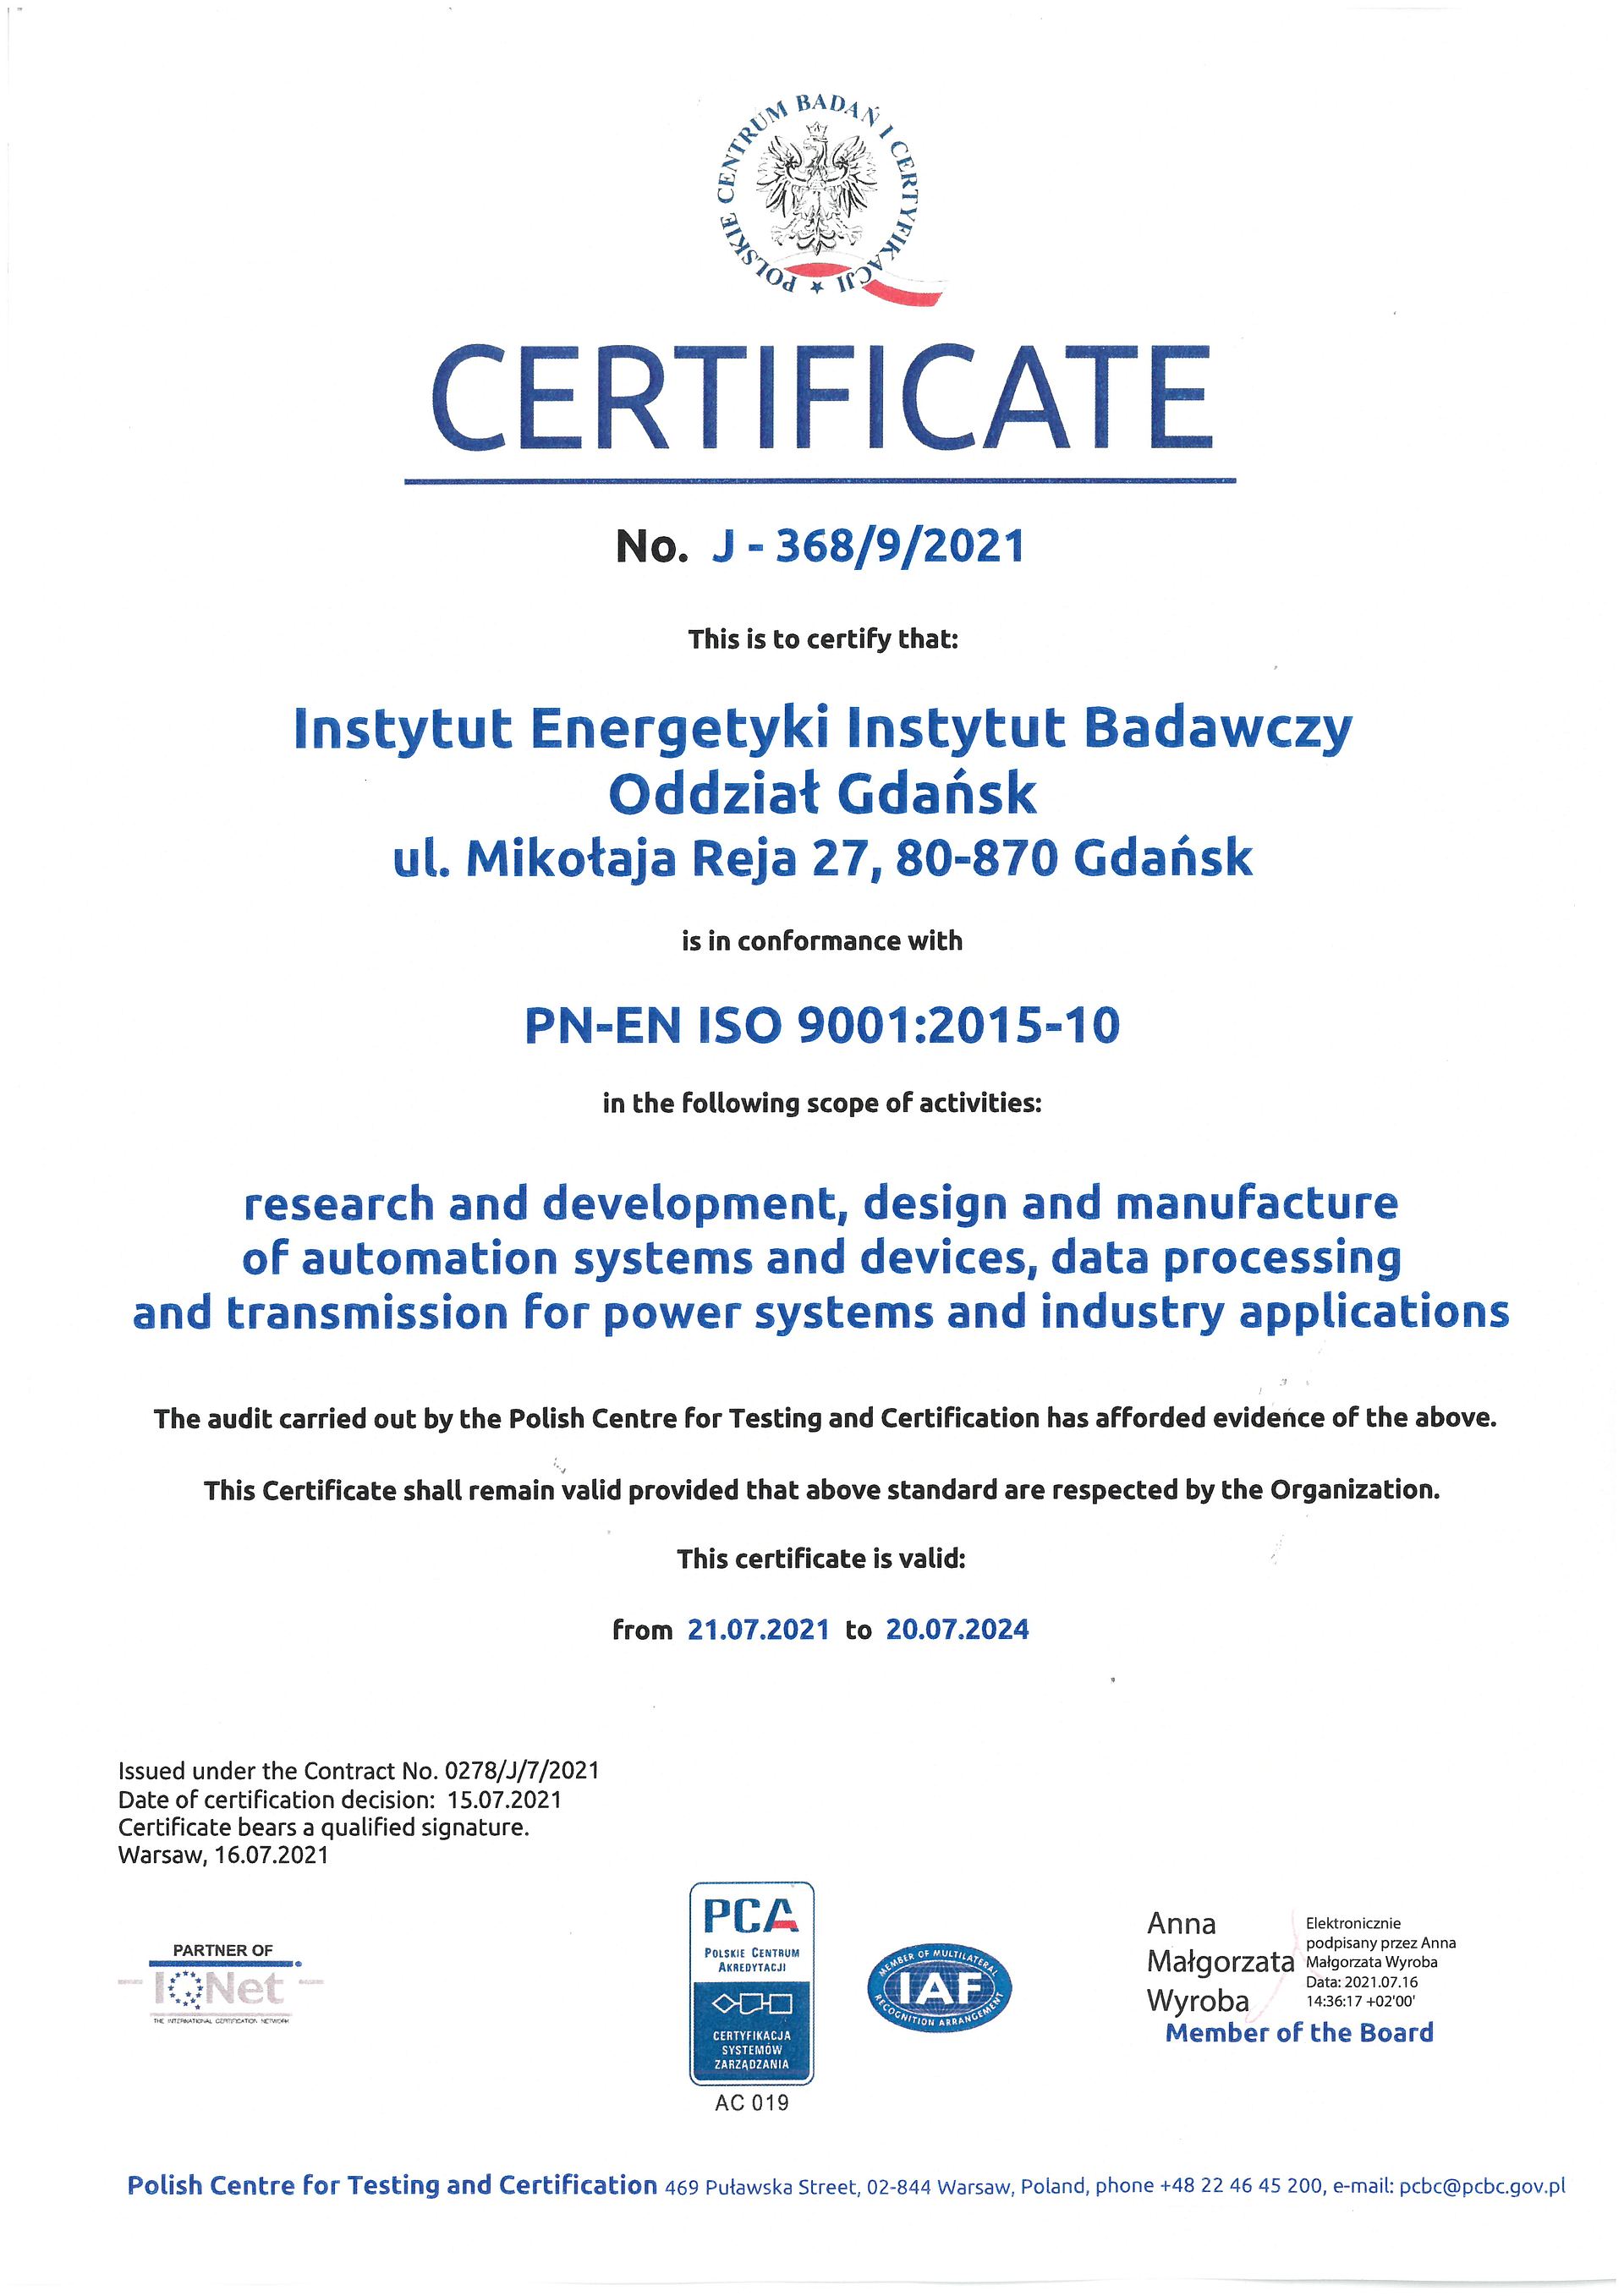 Certyfikat PN-EN ISO 9001:2015-10 (plik *.jpg)